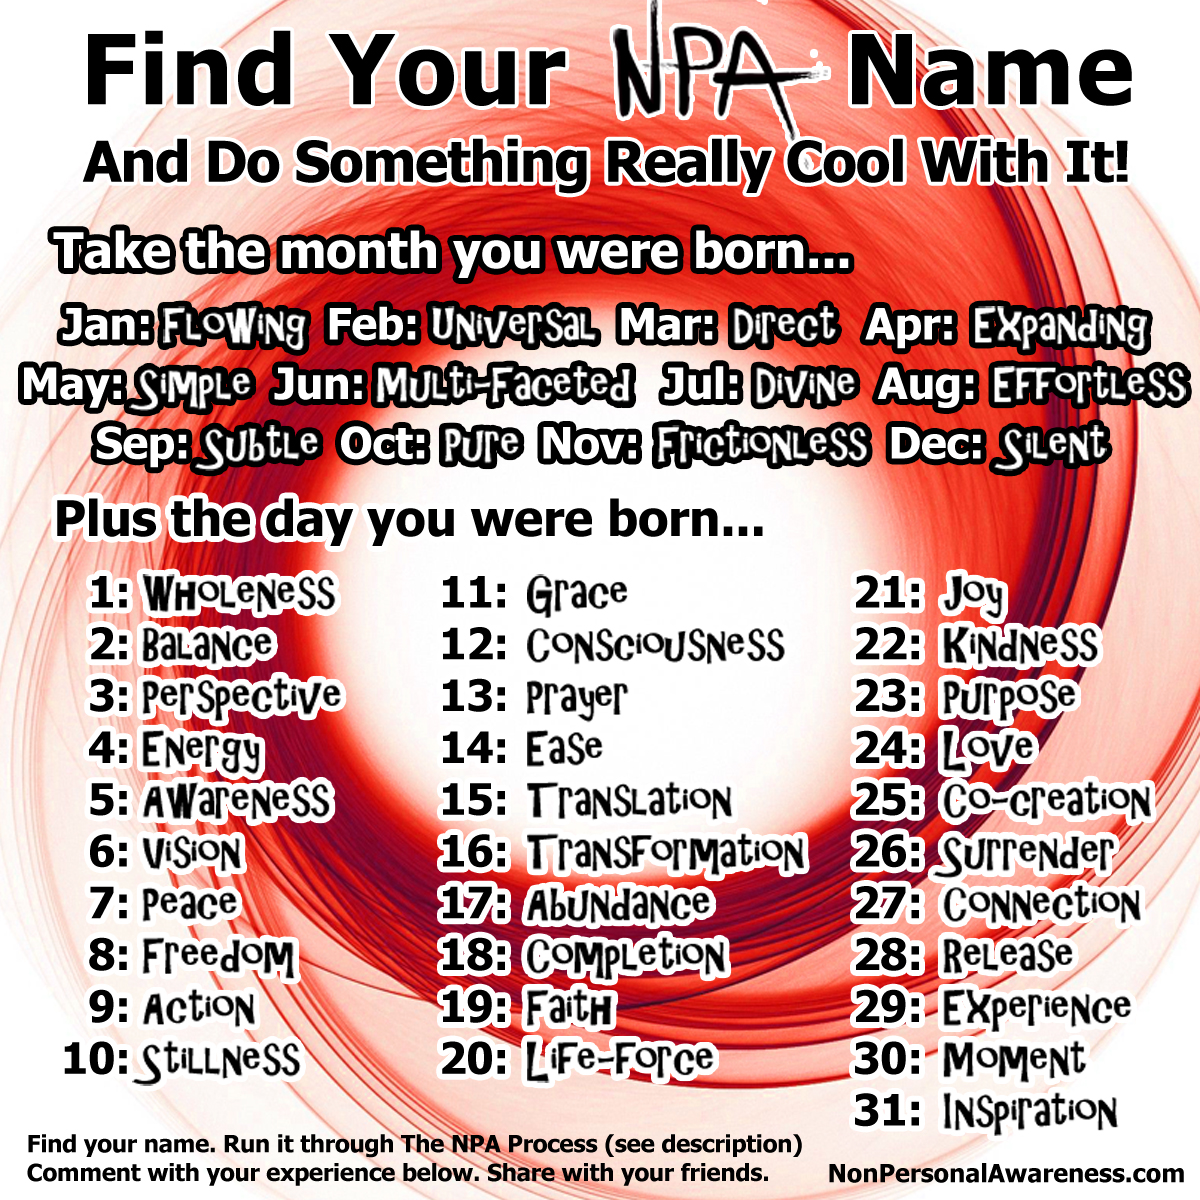 What's Your NPA Name